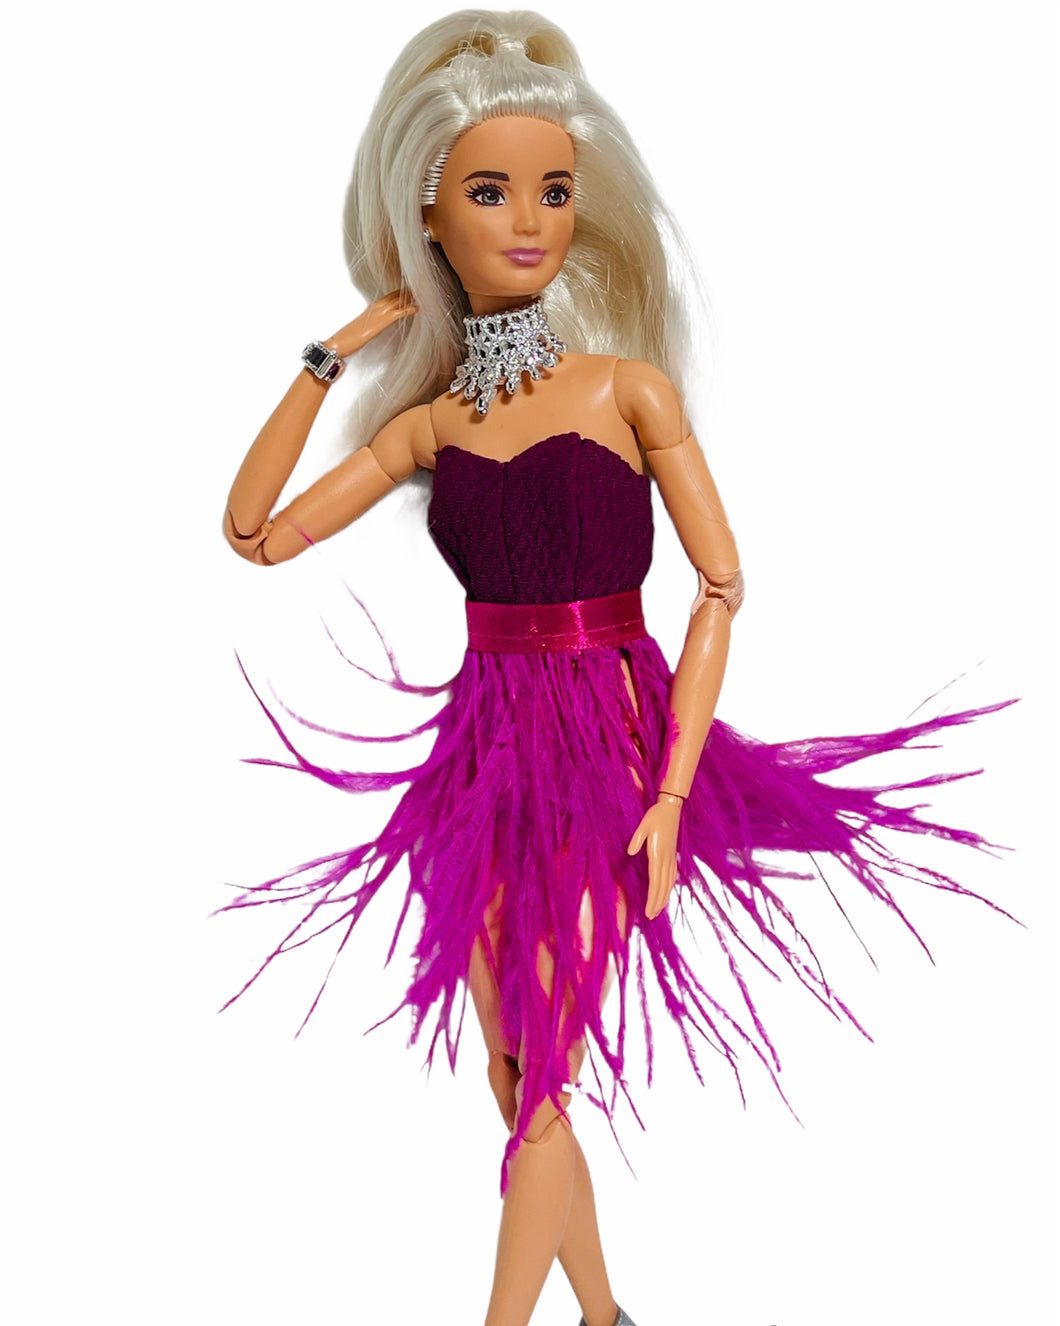 Pink dress for Barbie doll cocktail dress